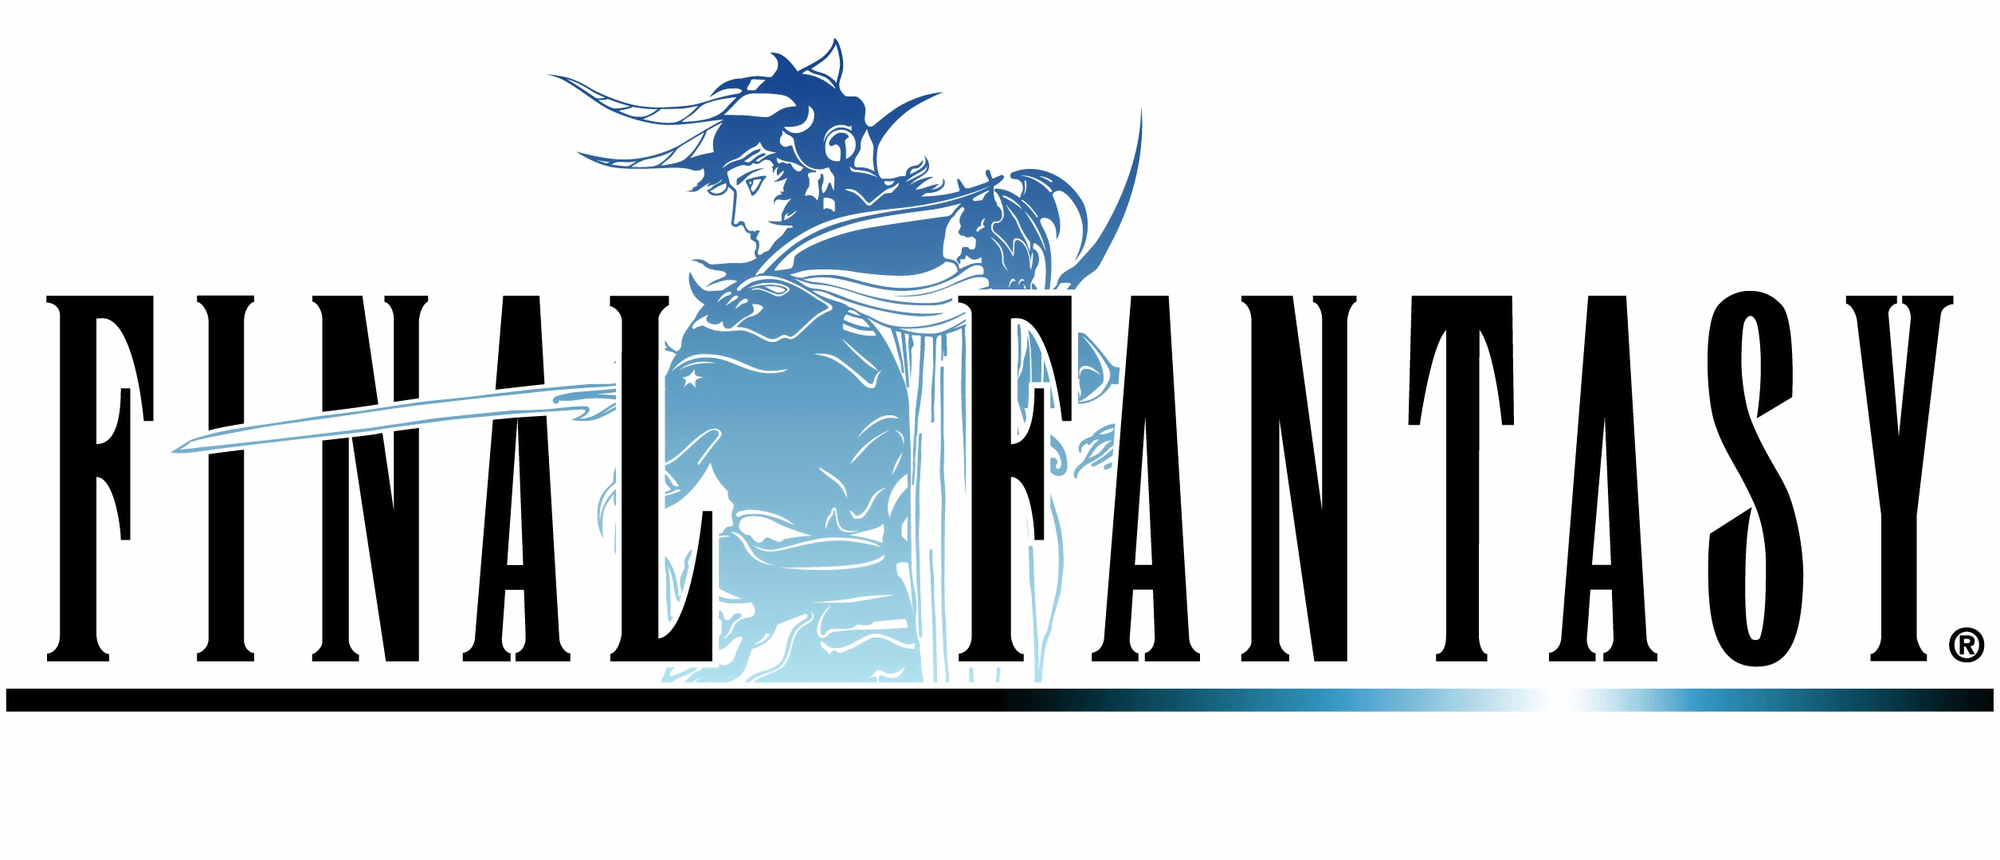 Noctis Logo - Logos of Final Fantasy